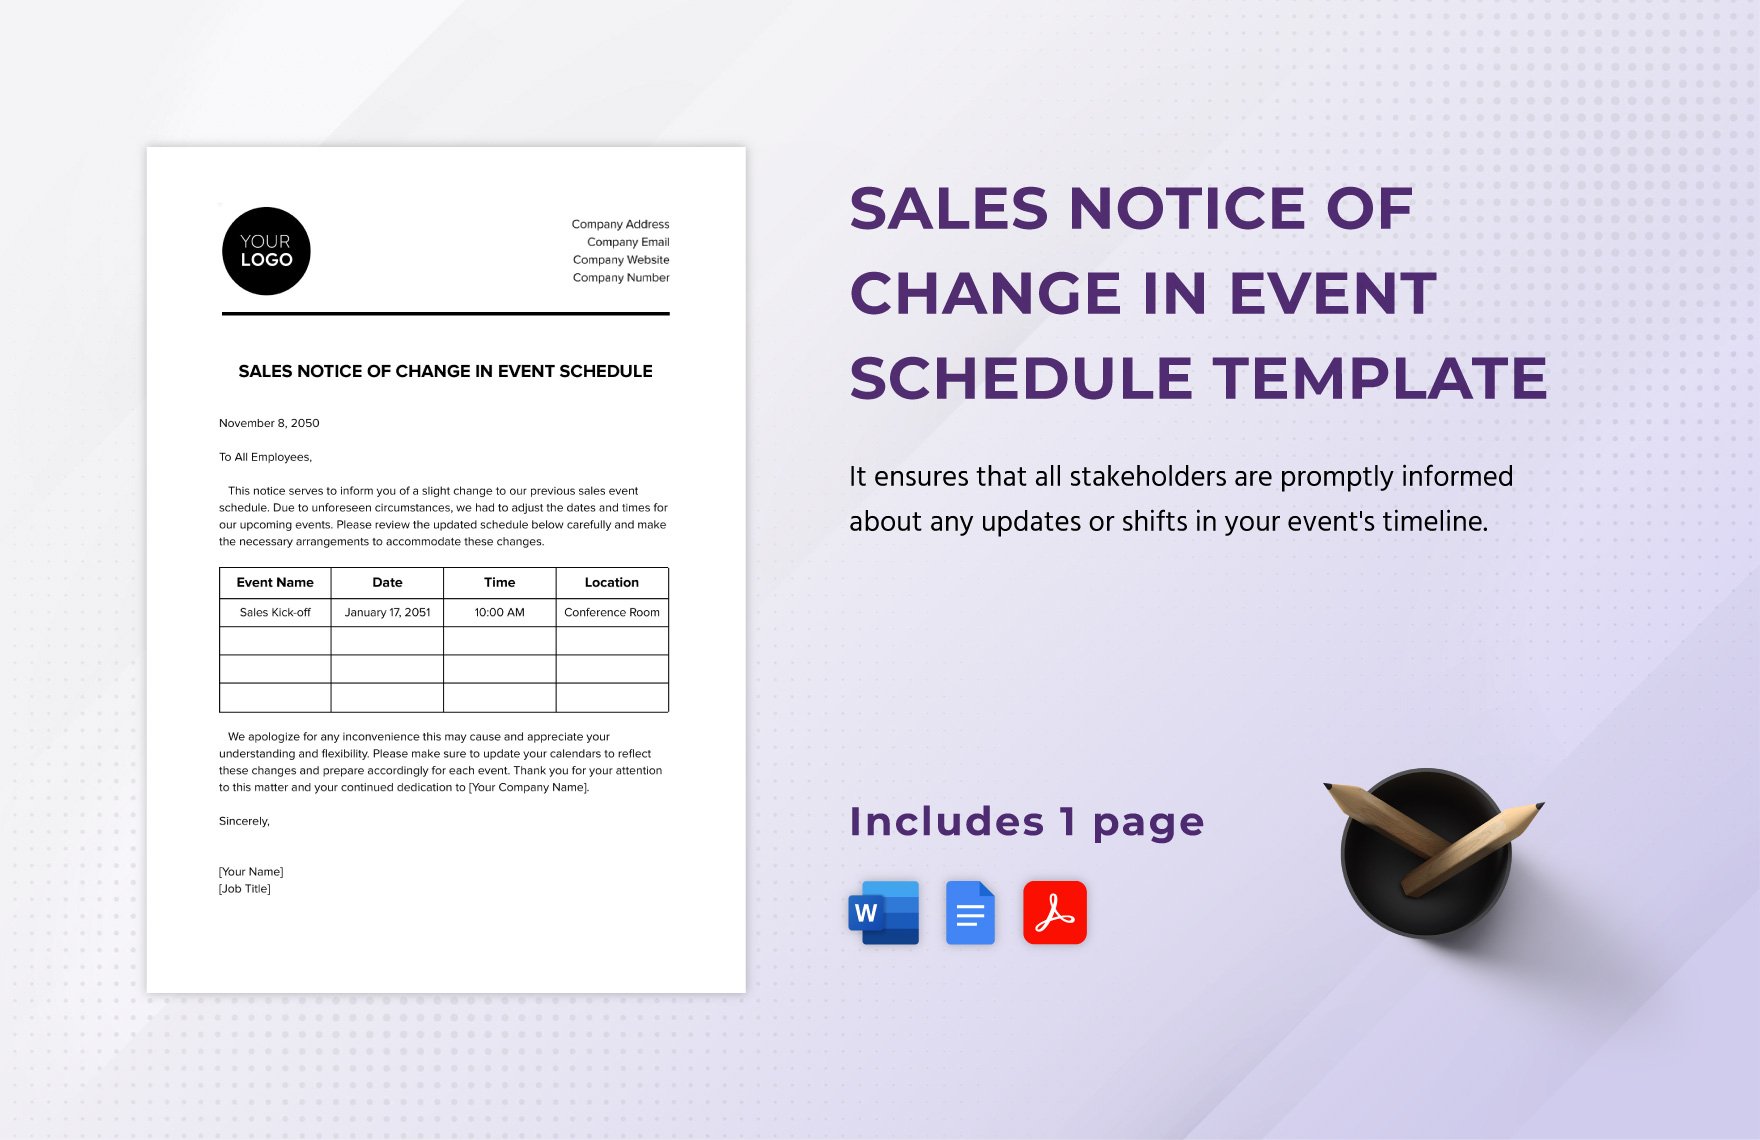 Sales Notice of Change in Event Schedule Template in Word, Google Docs, PDF